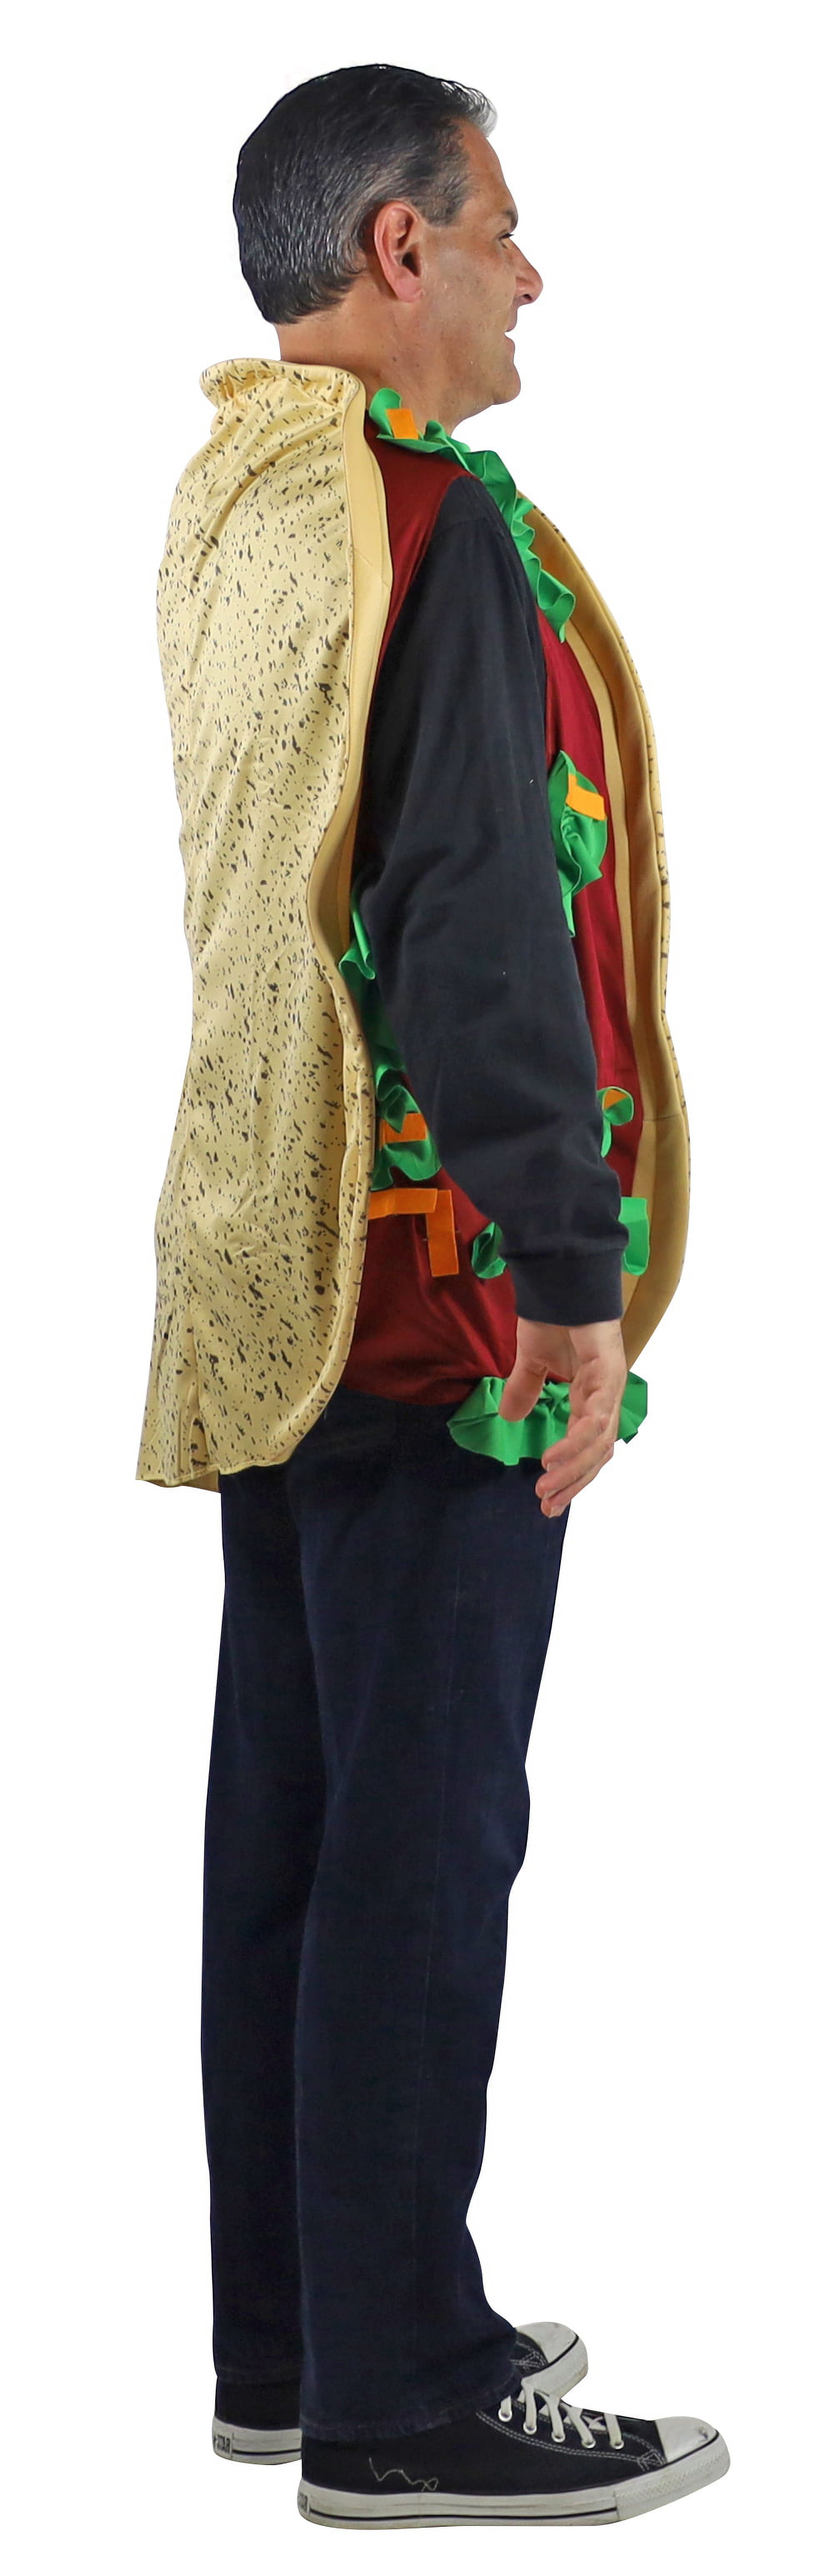 Rasta Imposta Taco Funny Halloween Costume, Adult, Unisex, One Size, Multi-color - image 3 of 6